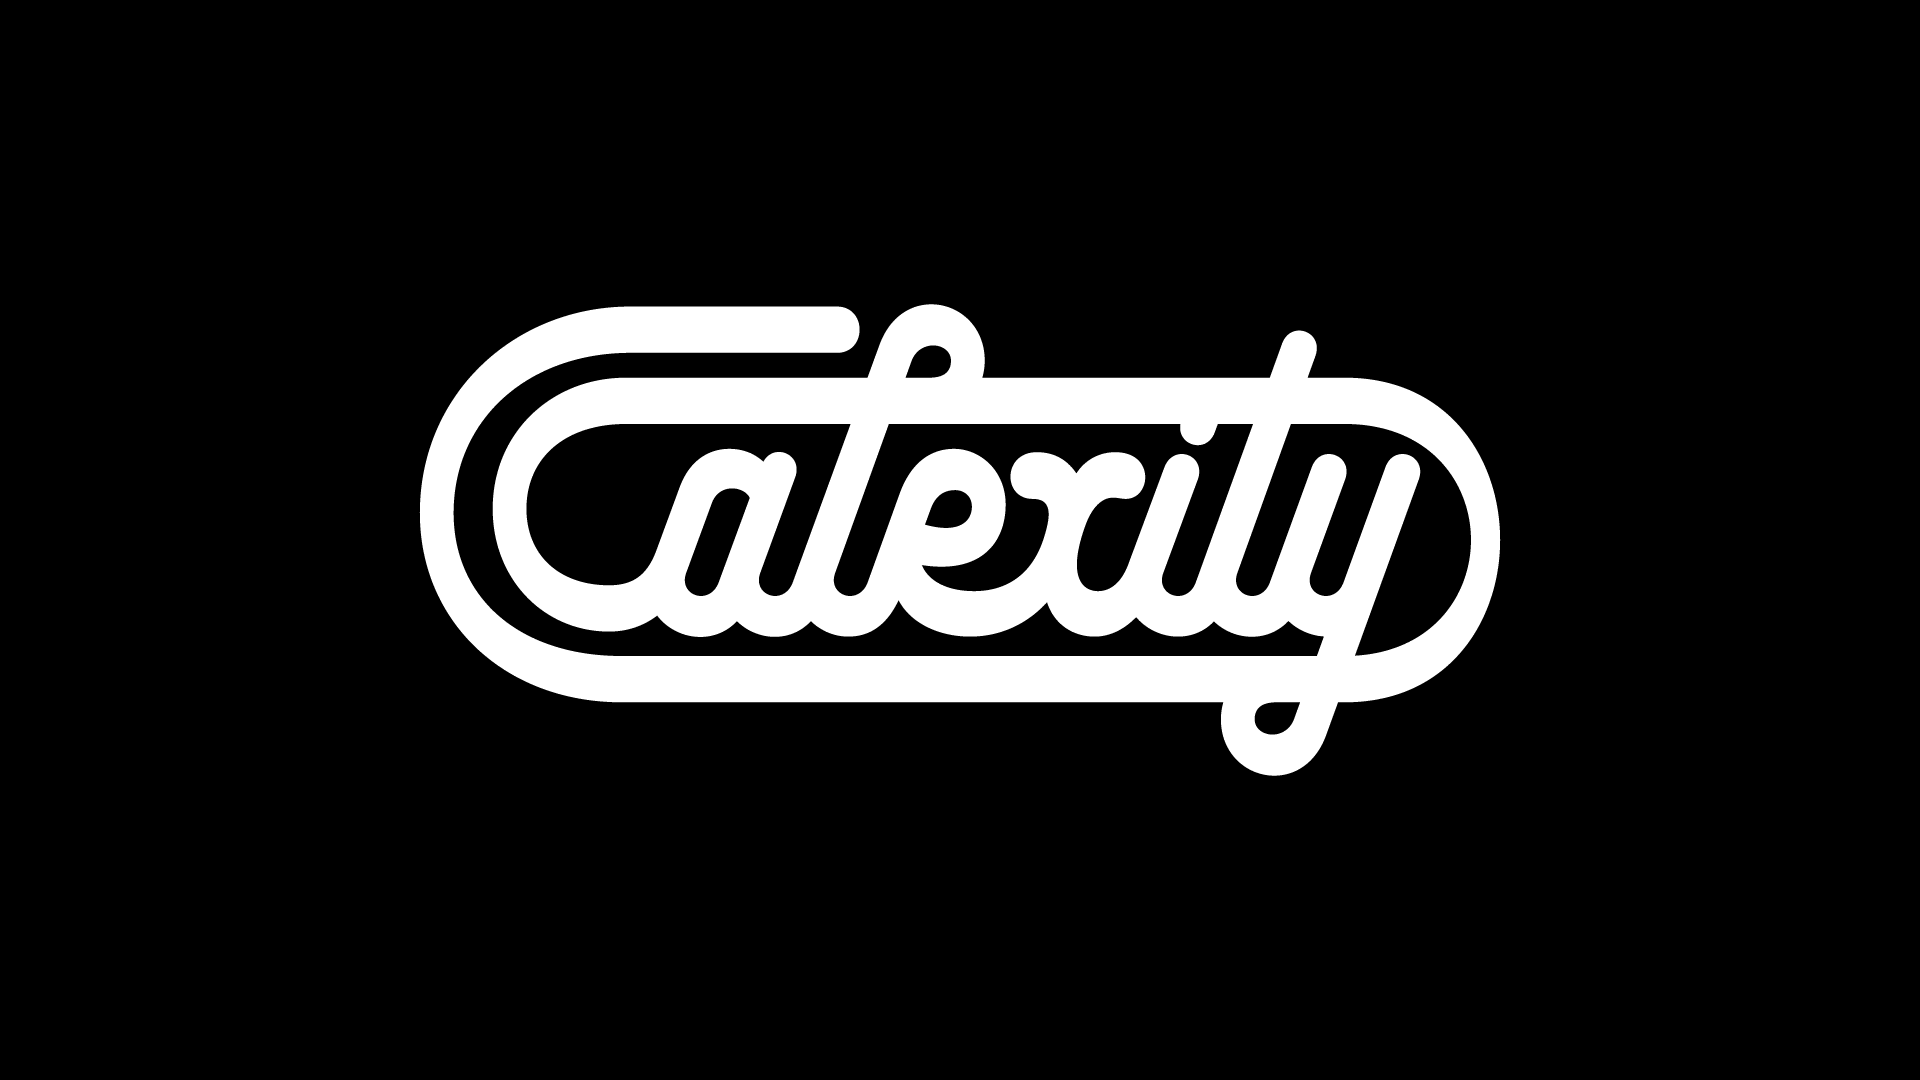 Branding: Calexity